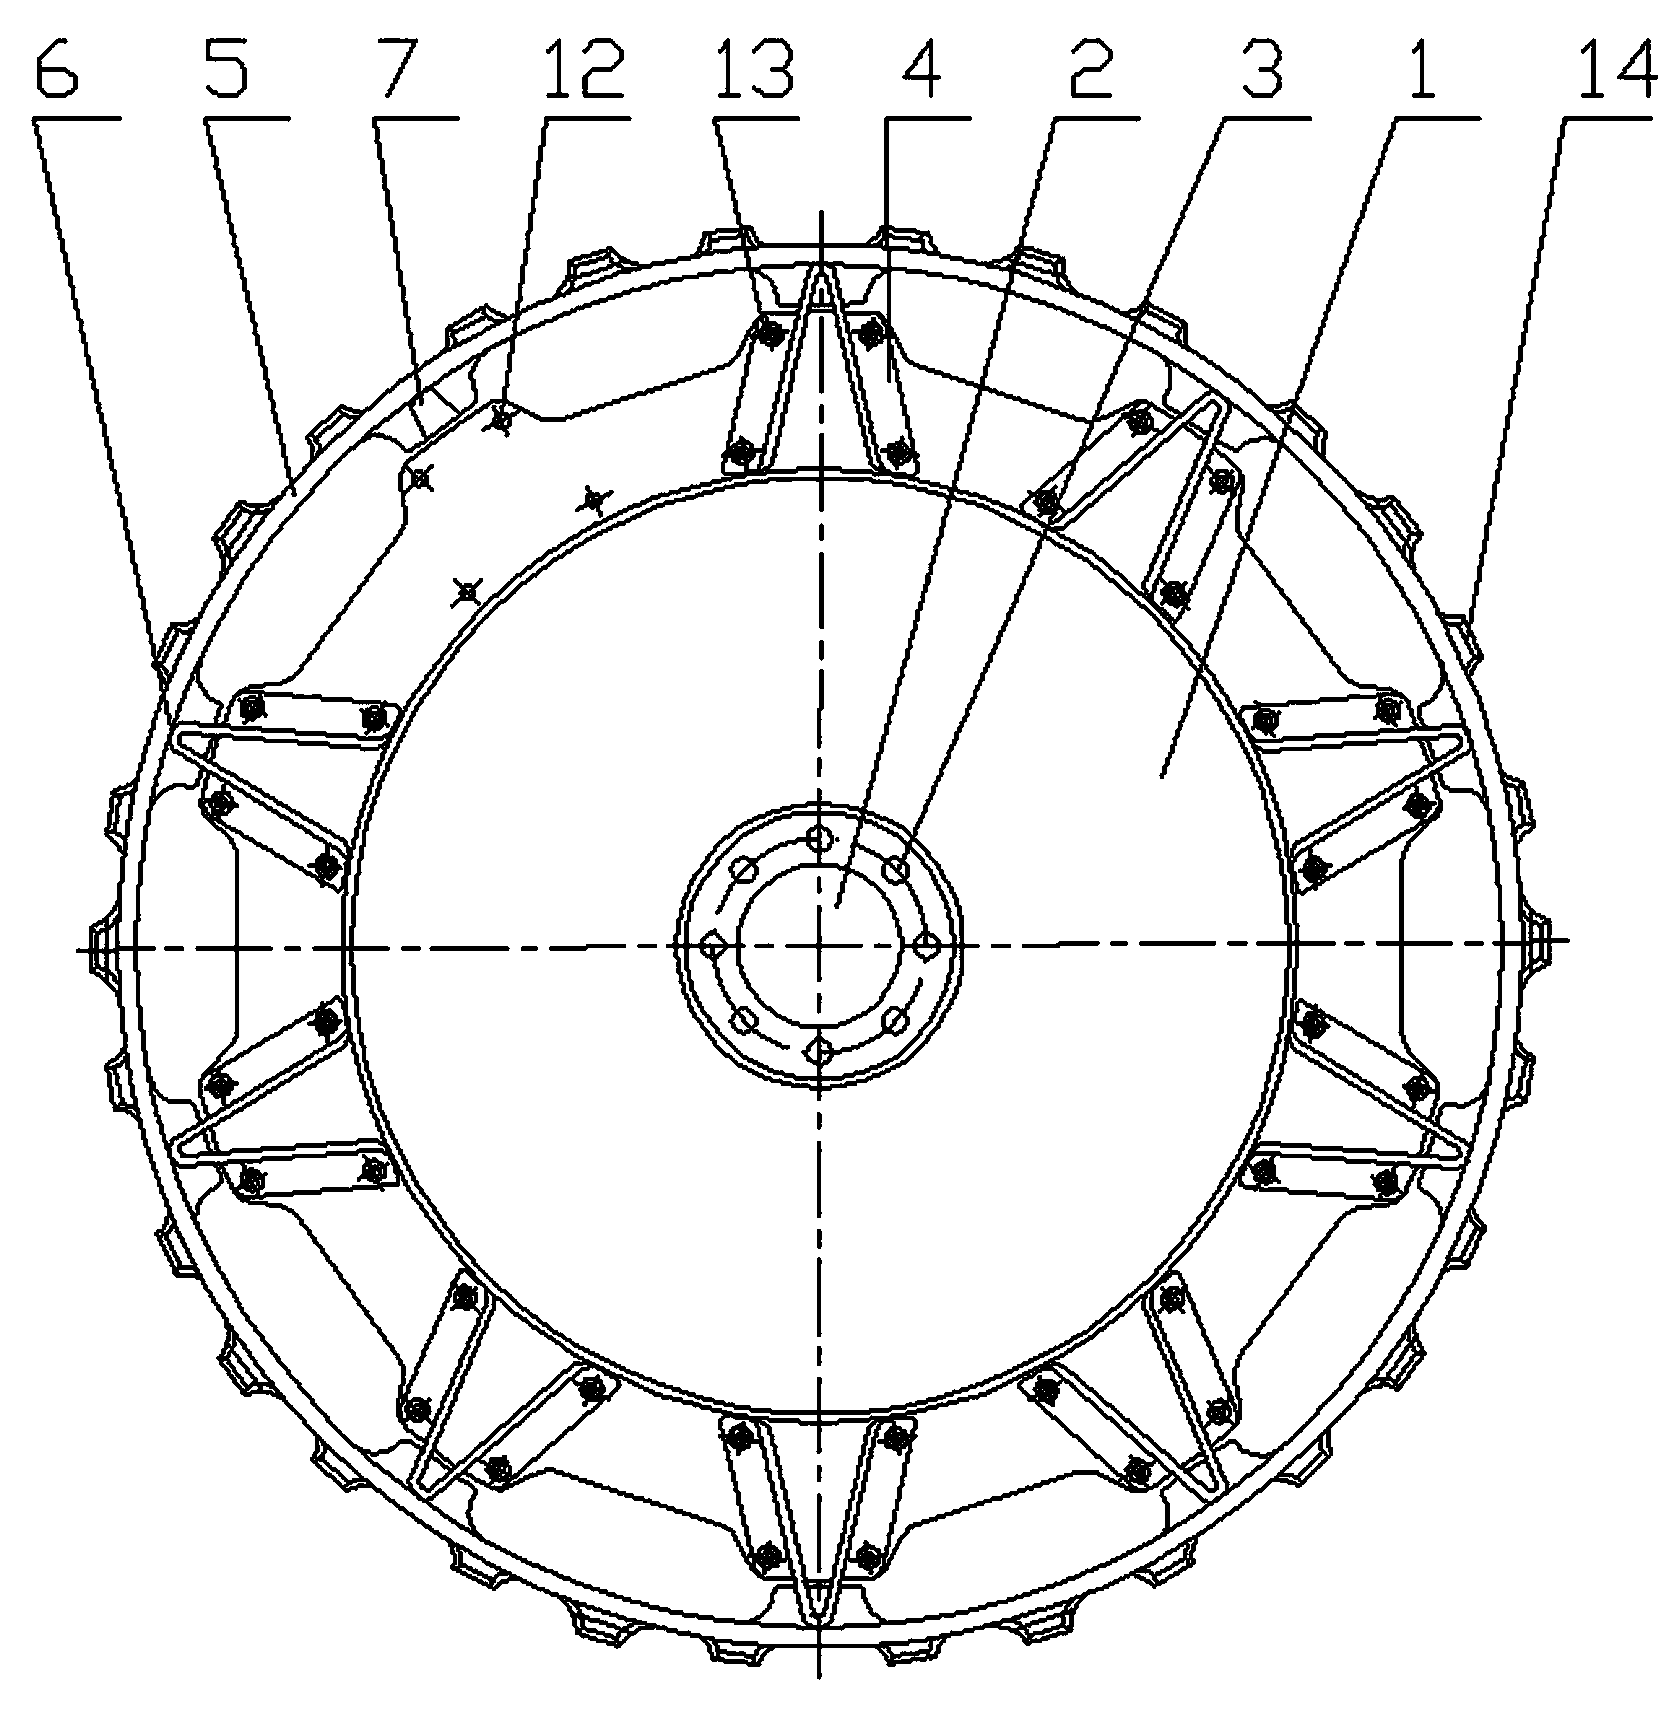 Ram-type composite pedrail wheel